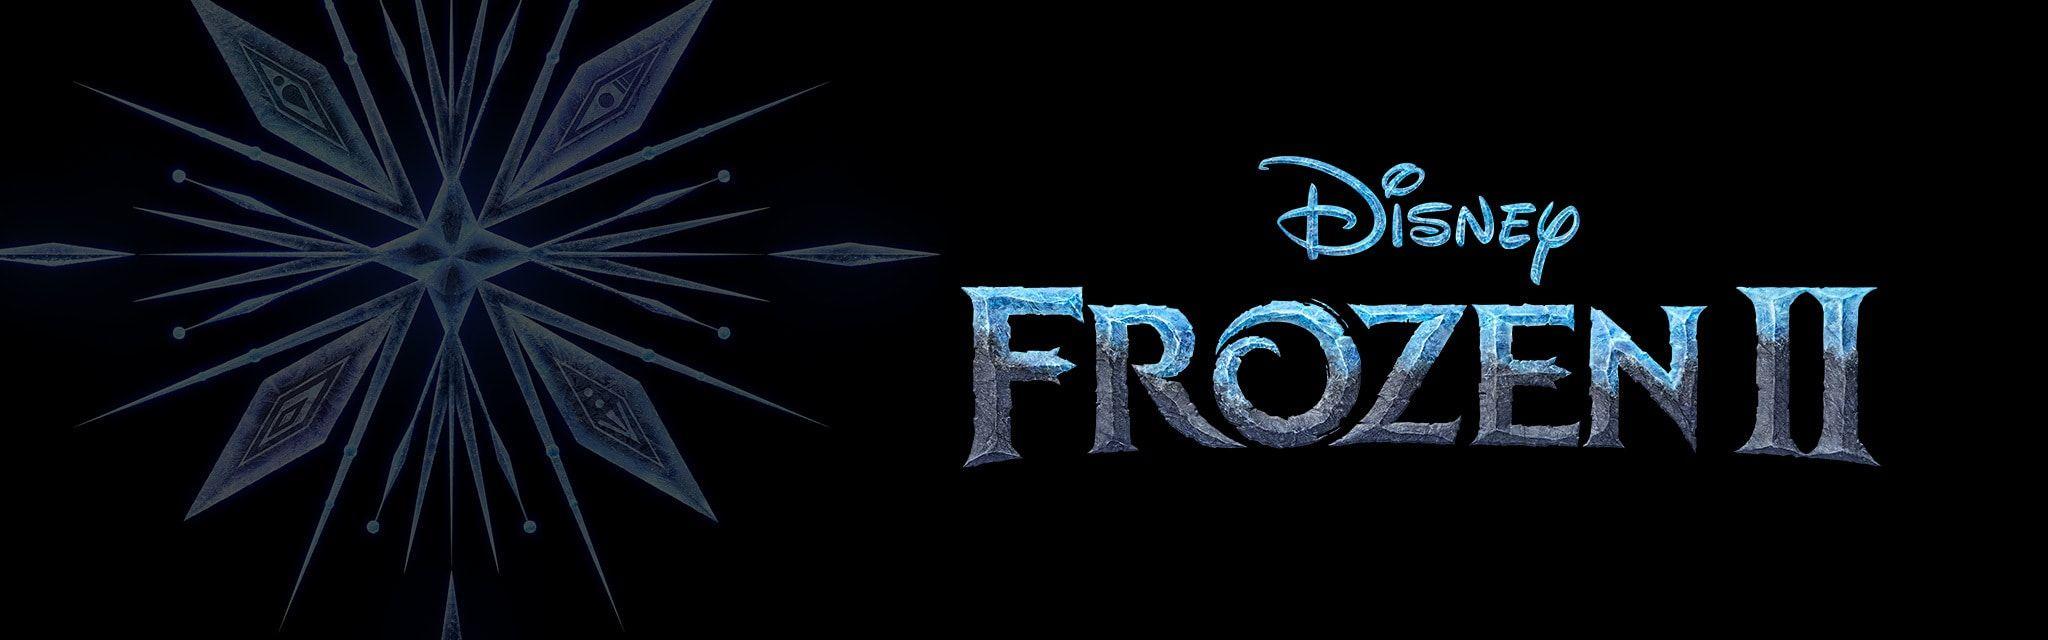 Disney Movie 2017 Logo - Disney Movies | Official Site